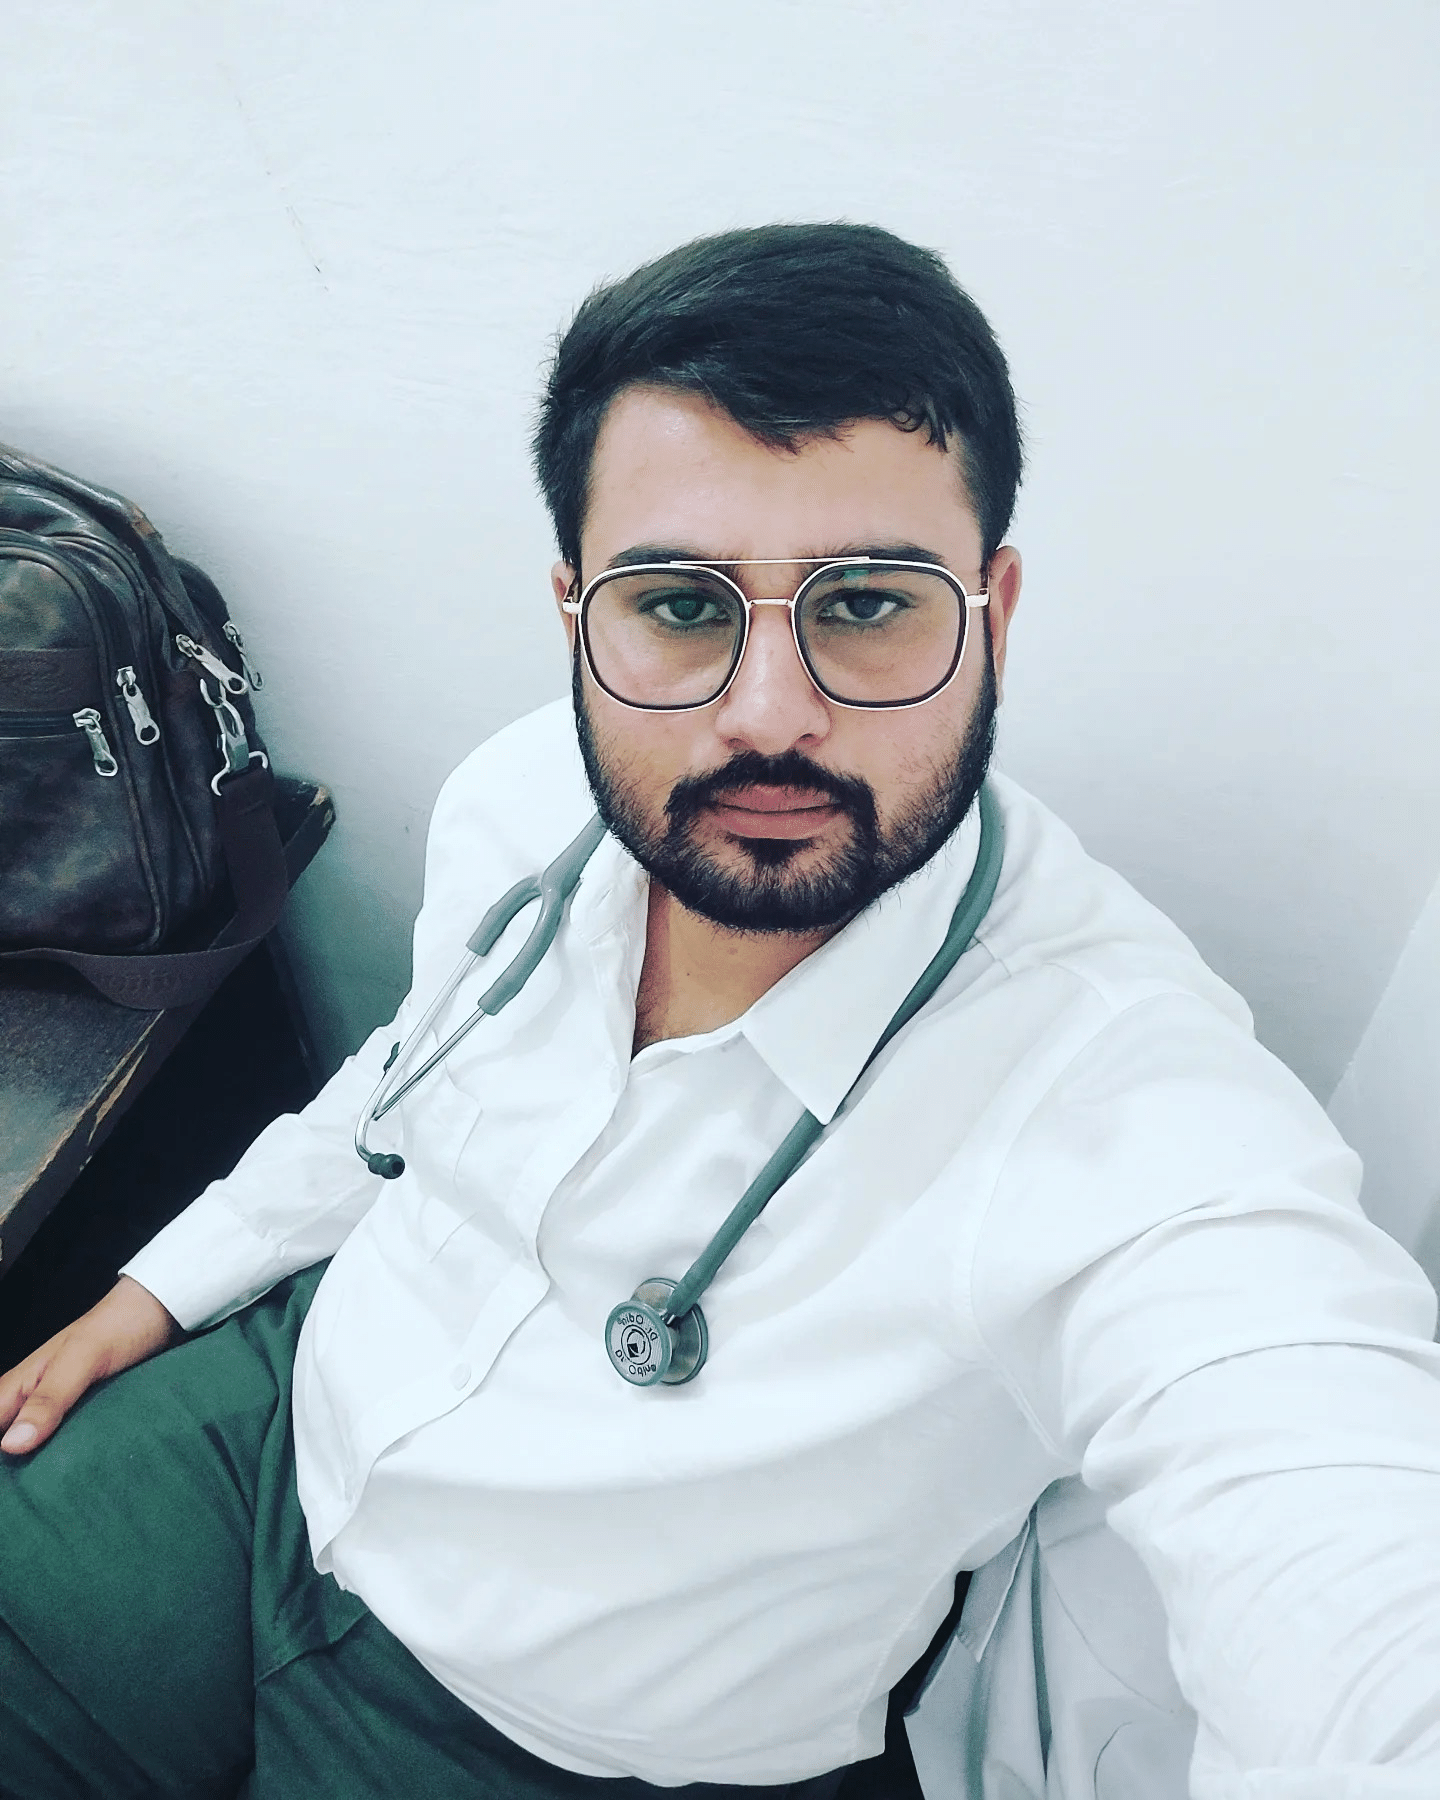 doctor-profile